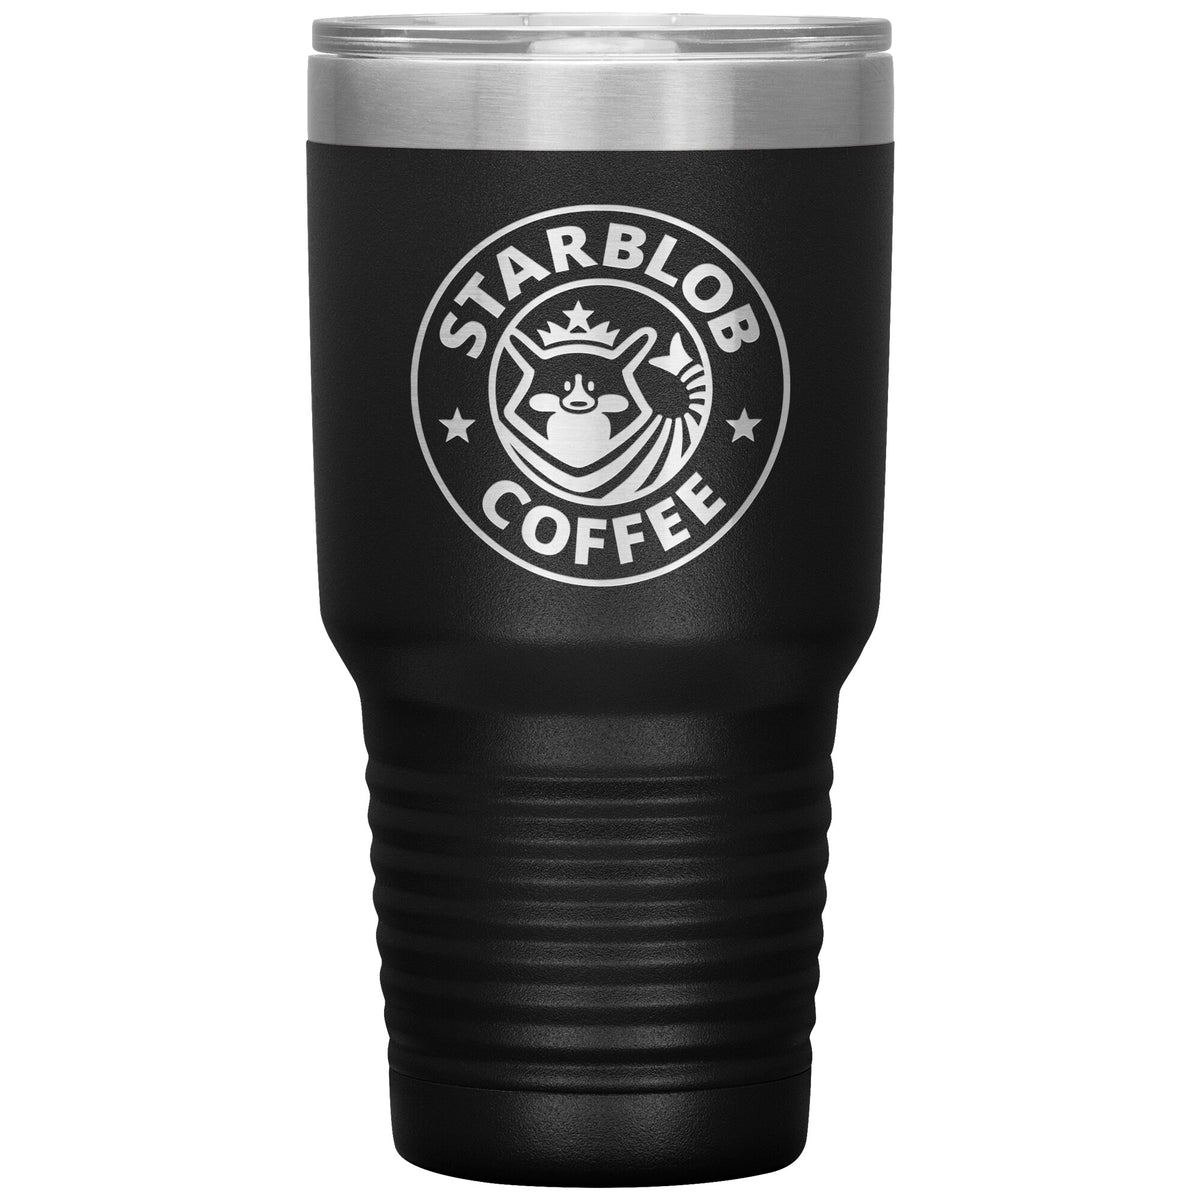 Starblob Coffee Tumbler - 30oz